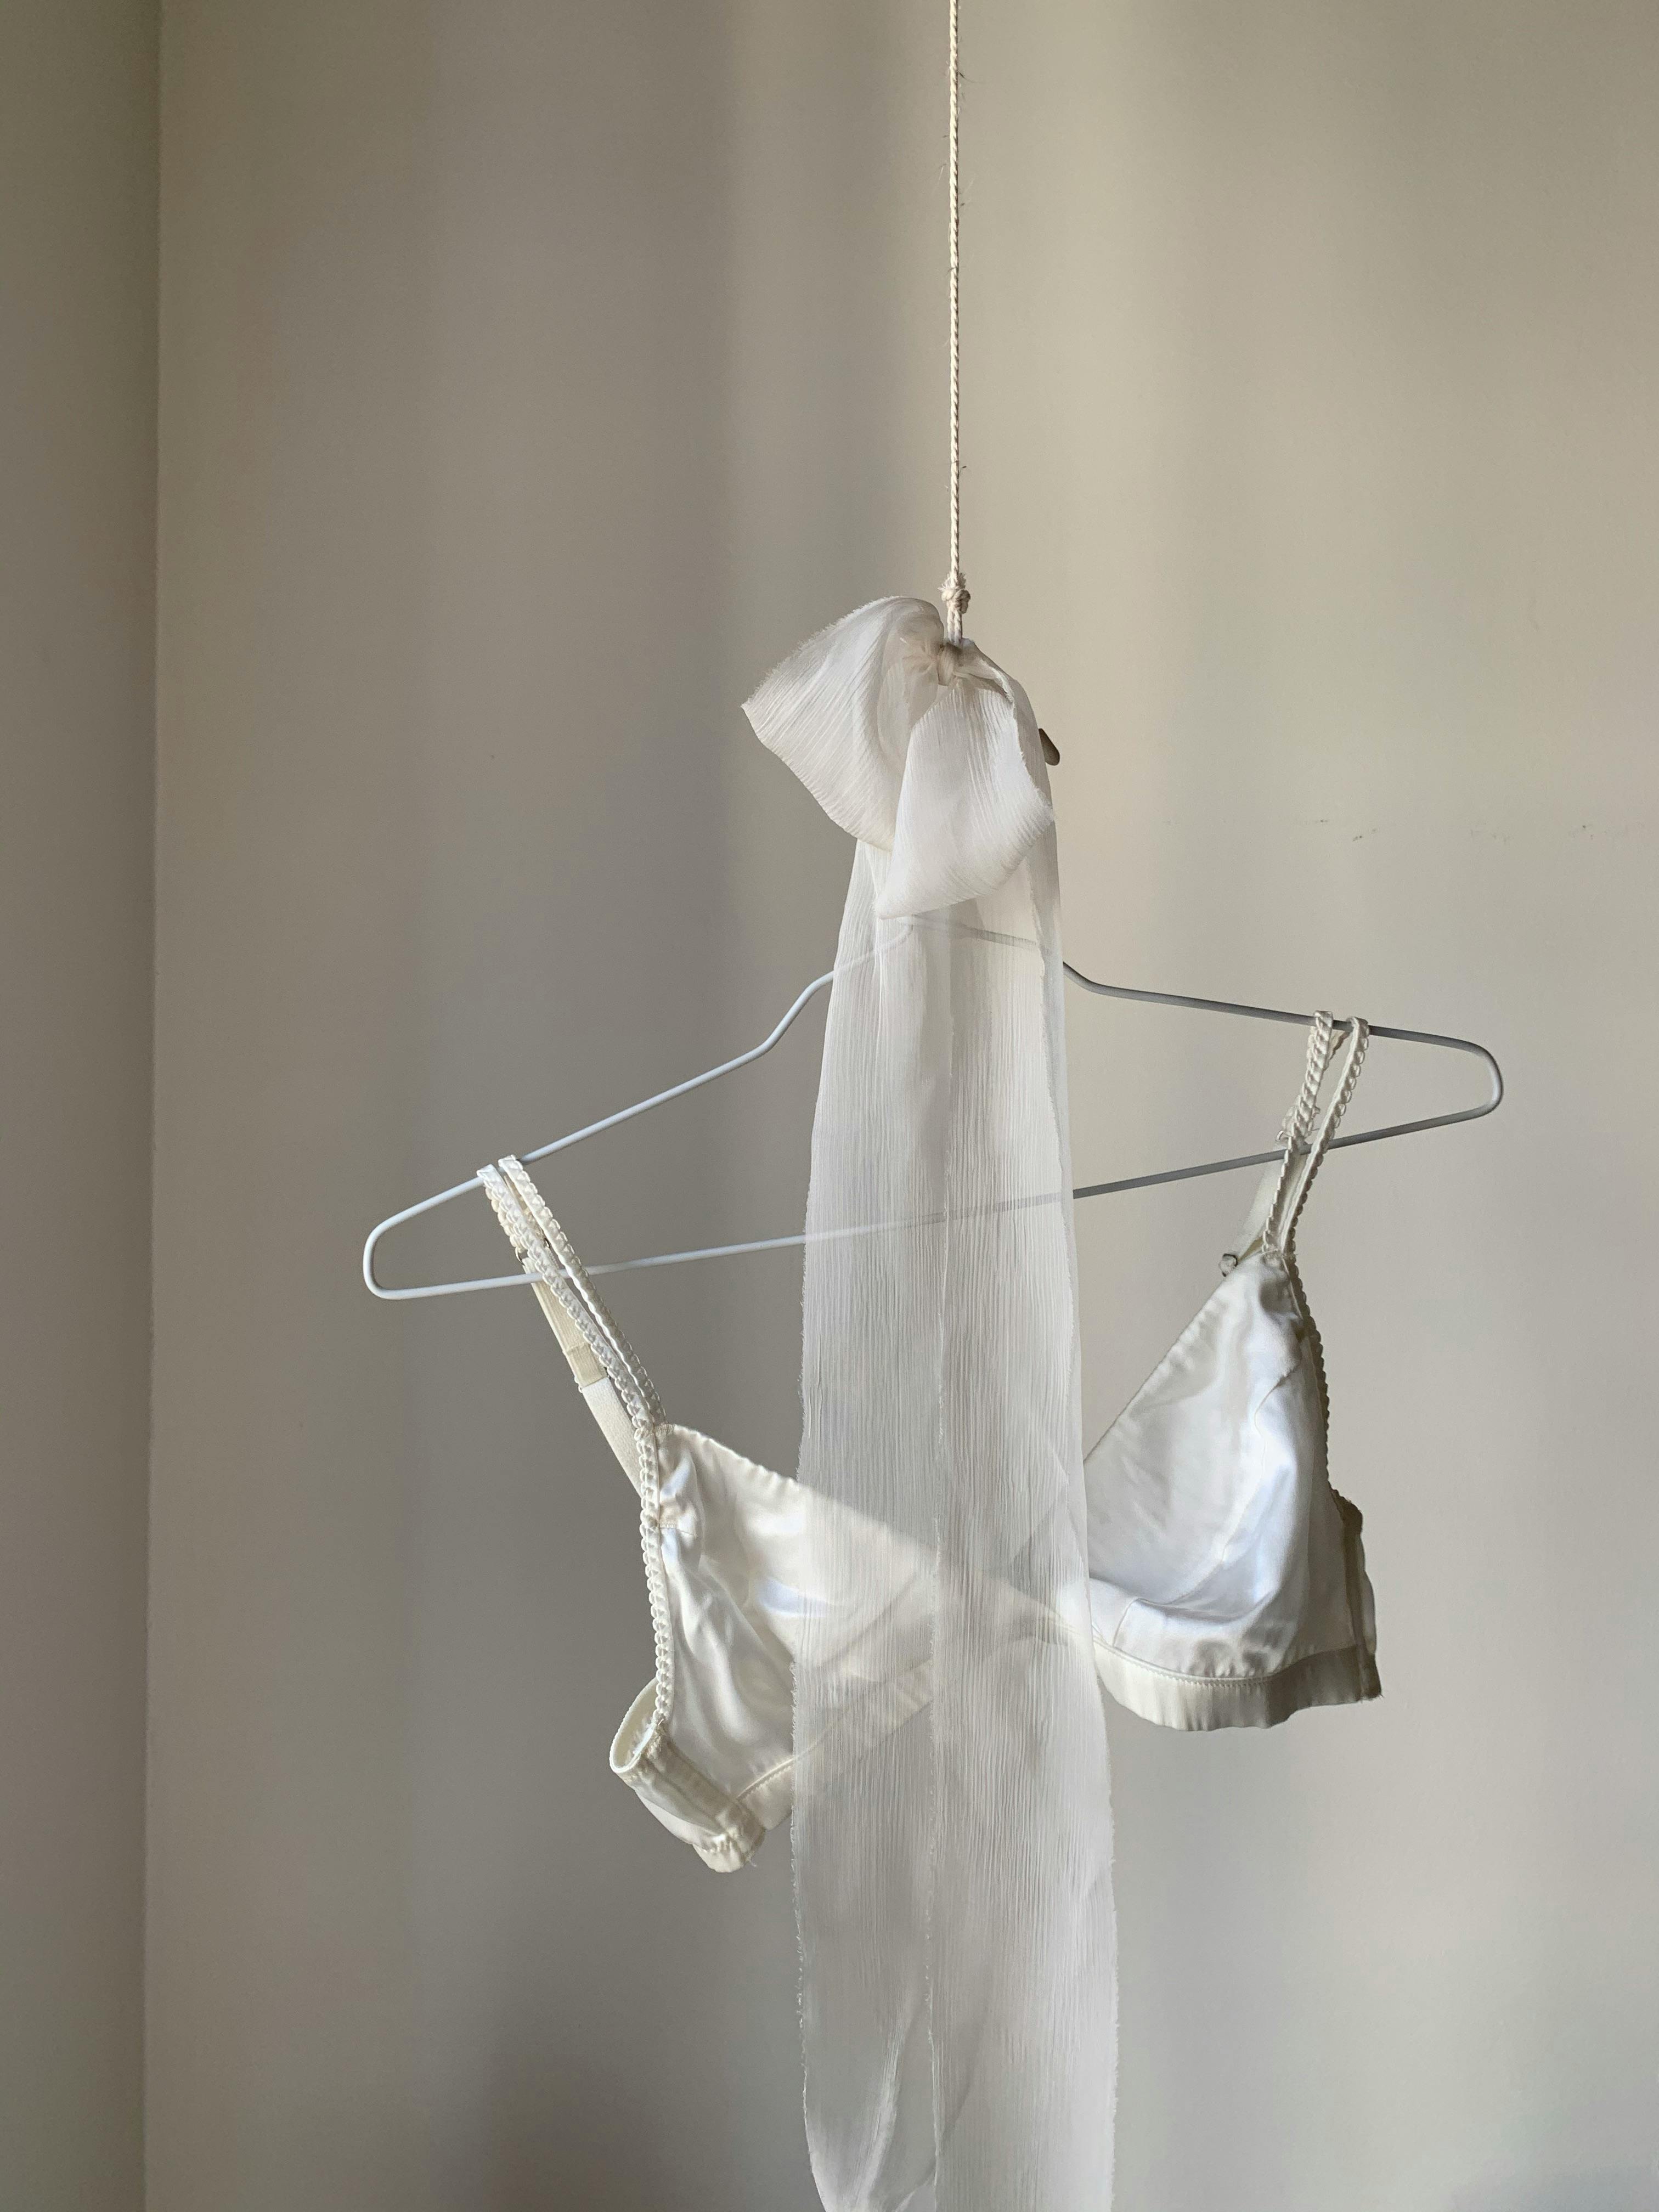 Bra on Clothes Hanger · Free Stock Photo